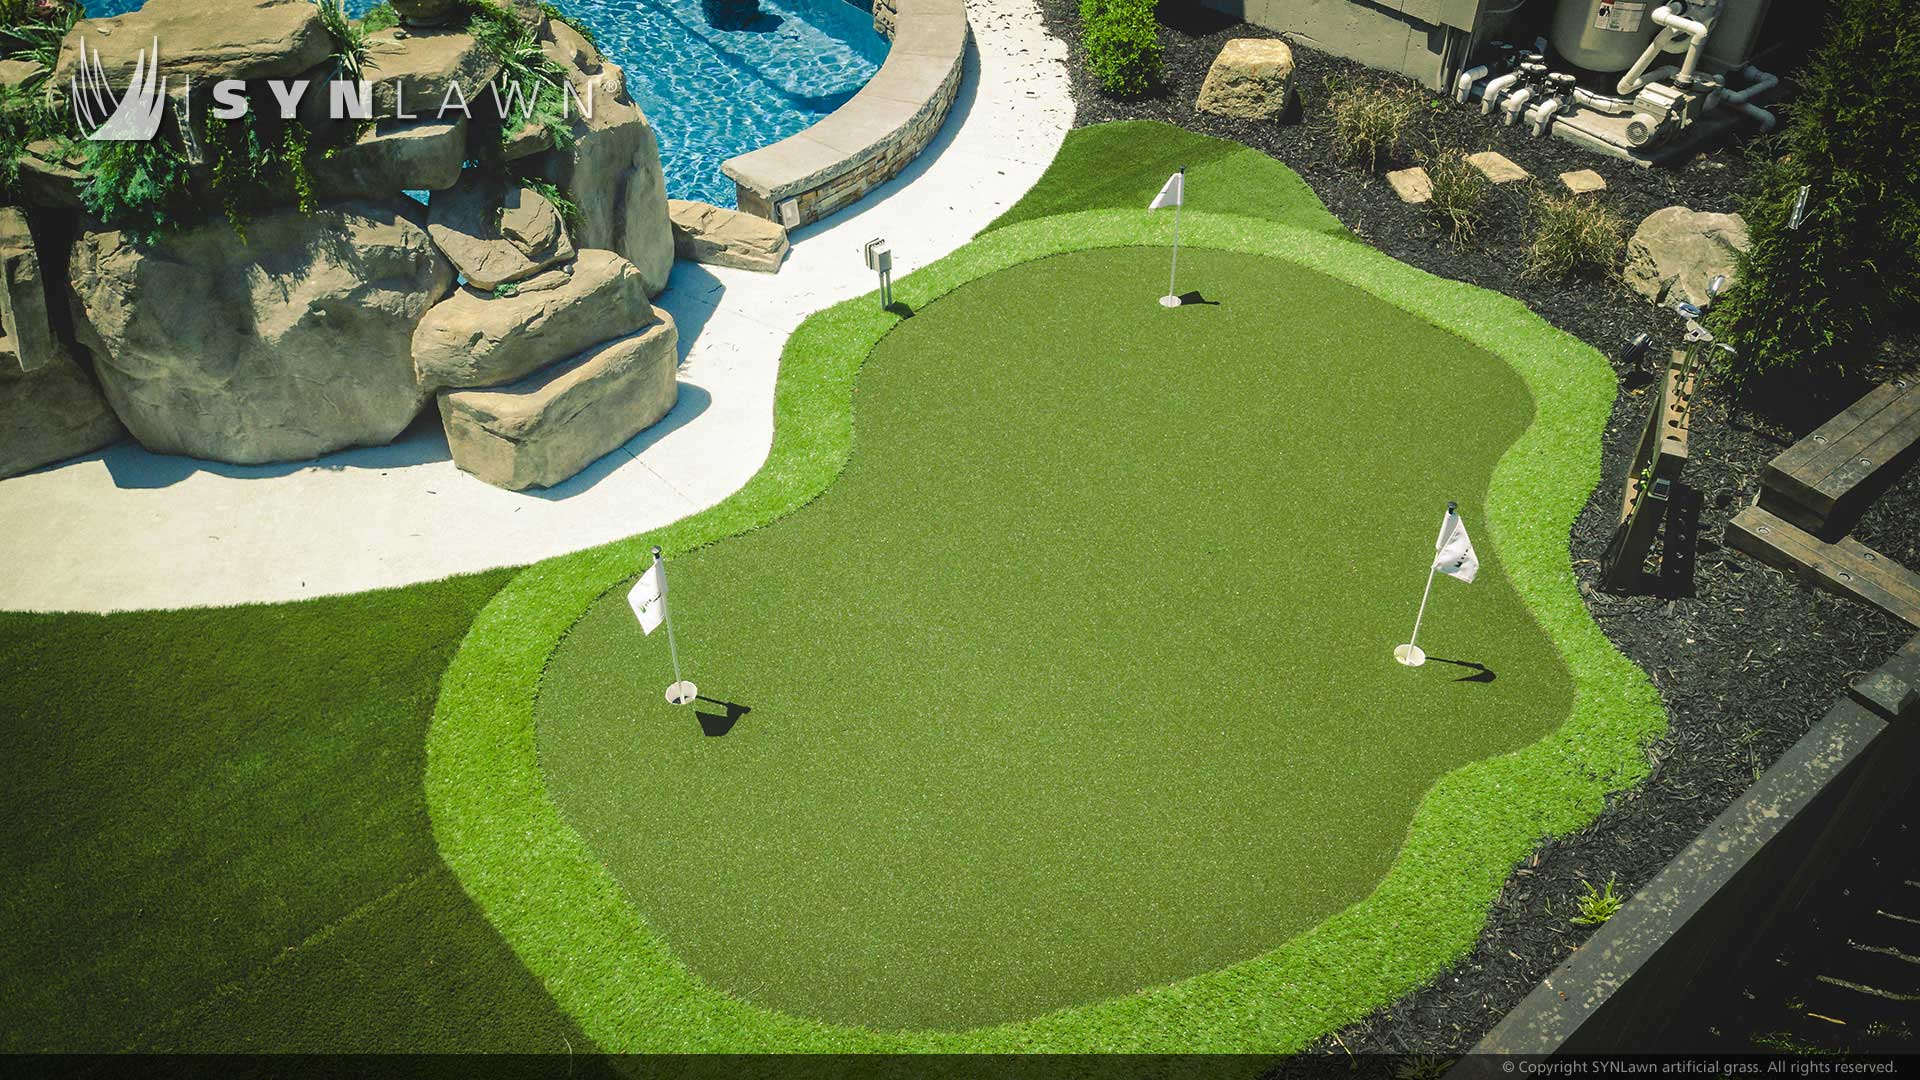 SYNLawn-Backyard-Artificial-Grass-golf-putting-green-